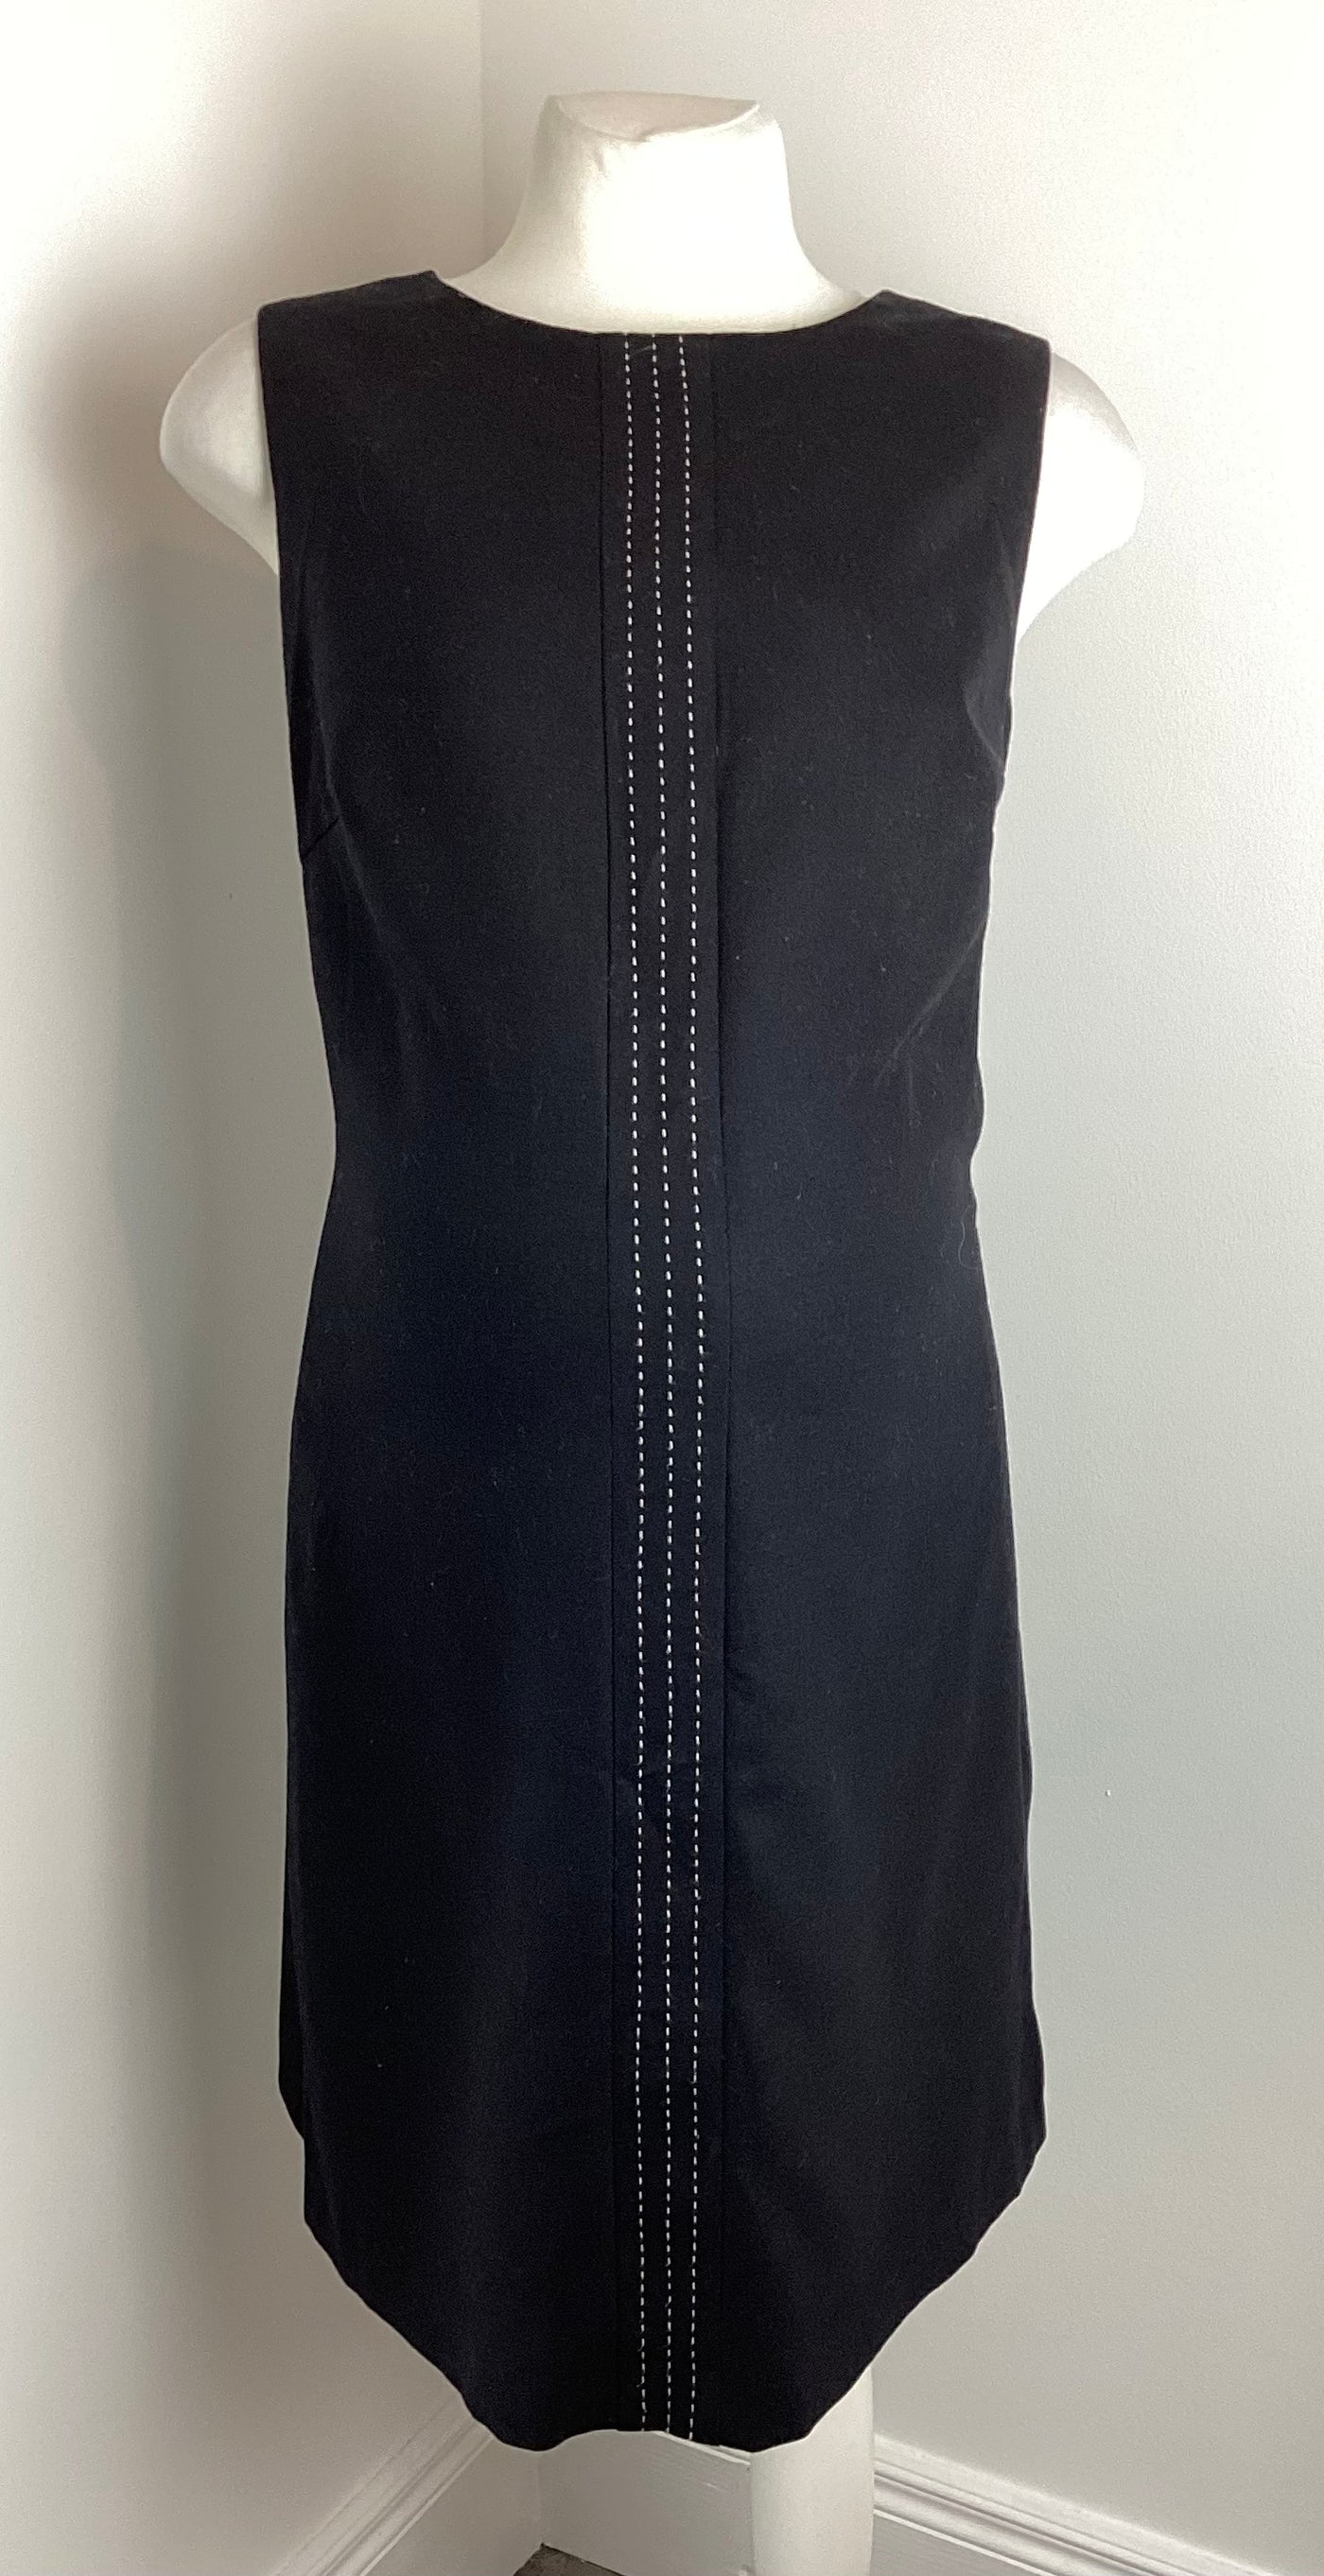 Boden Black sleeveless dress with white stitching - Size 14R